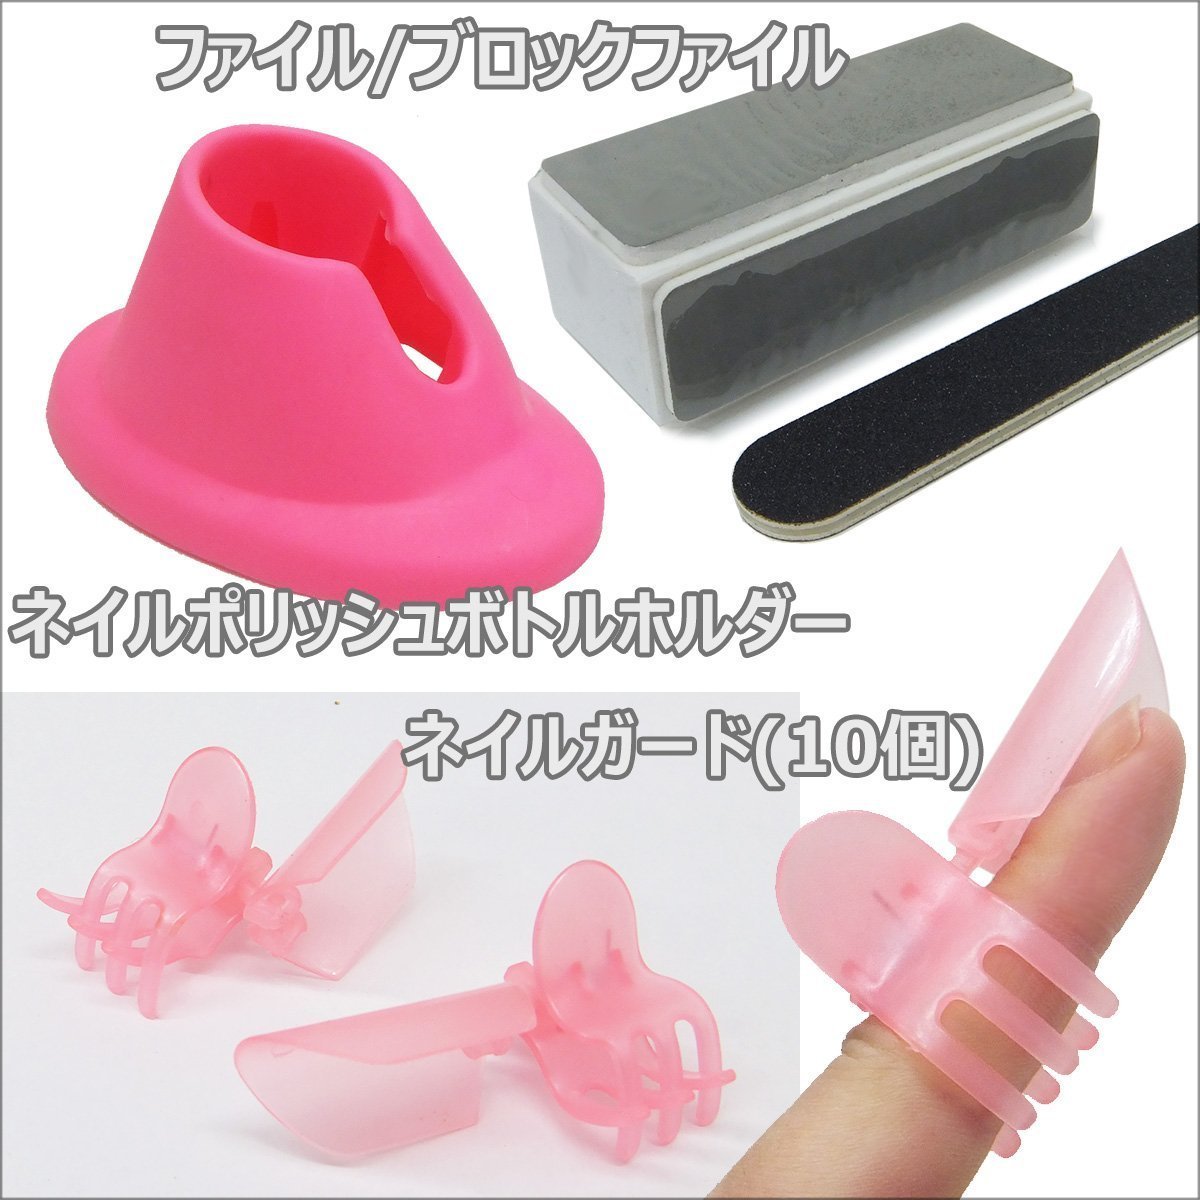  nails supplies assortment set (Z) gel scalp deco material finger bowl remover /22К